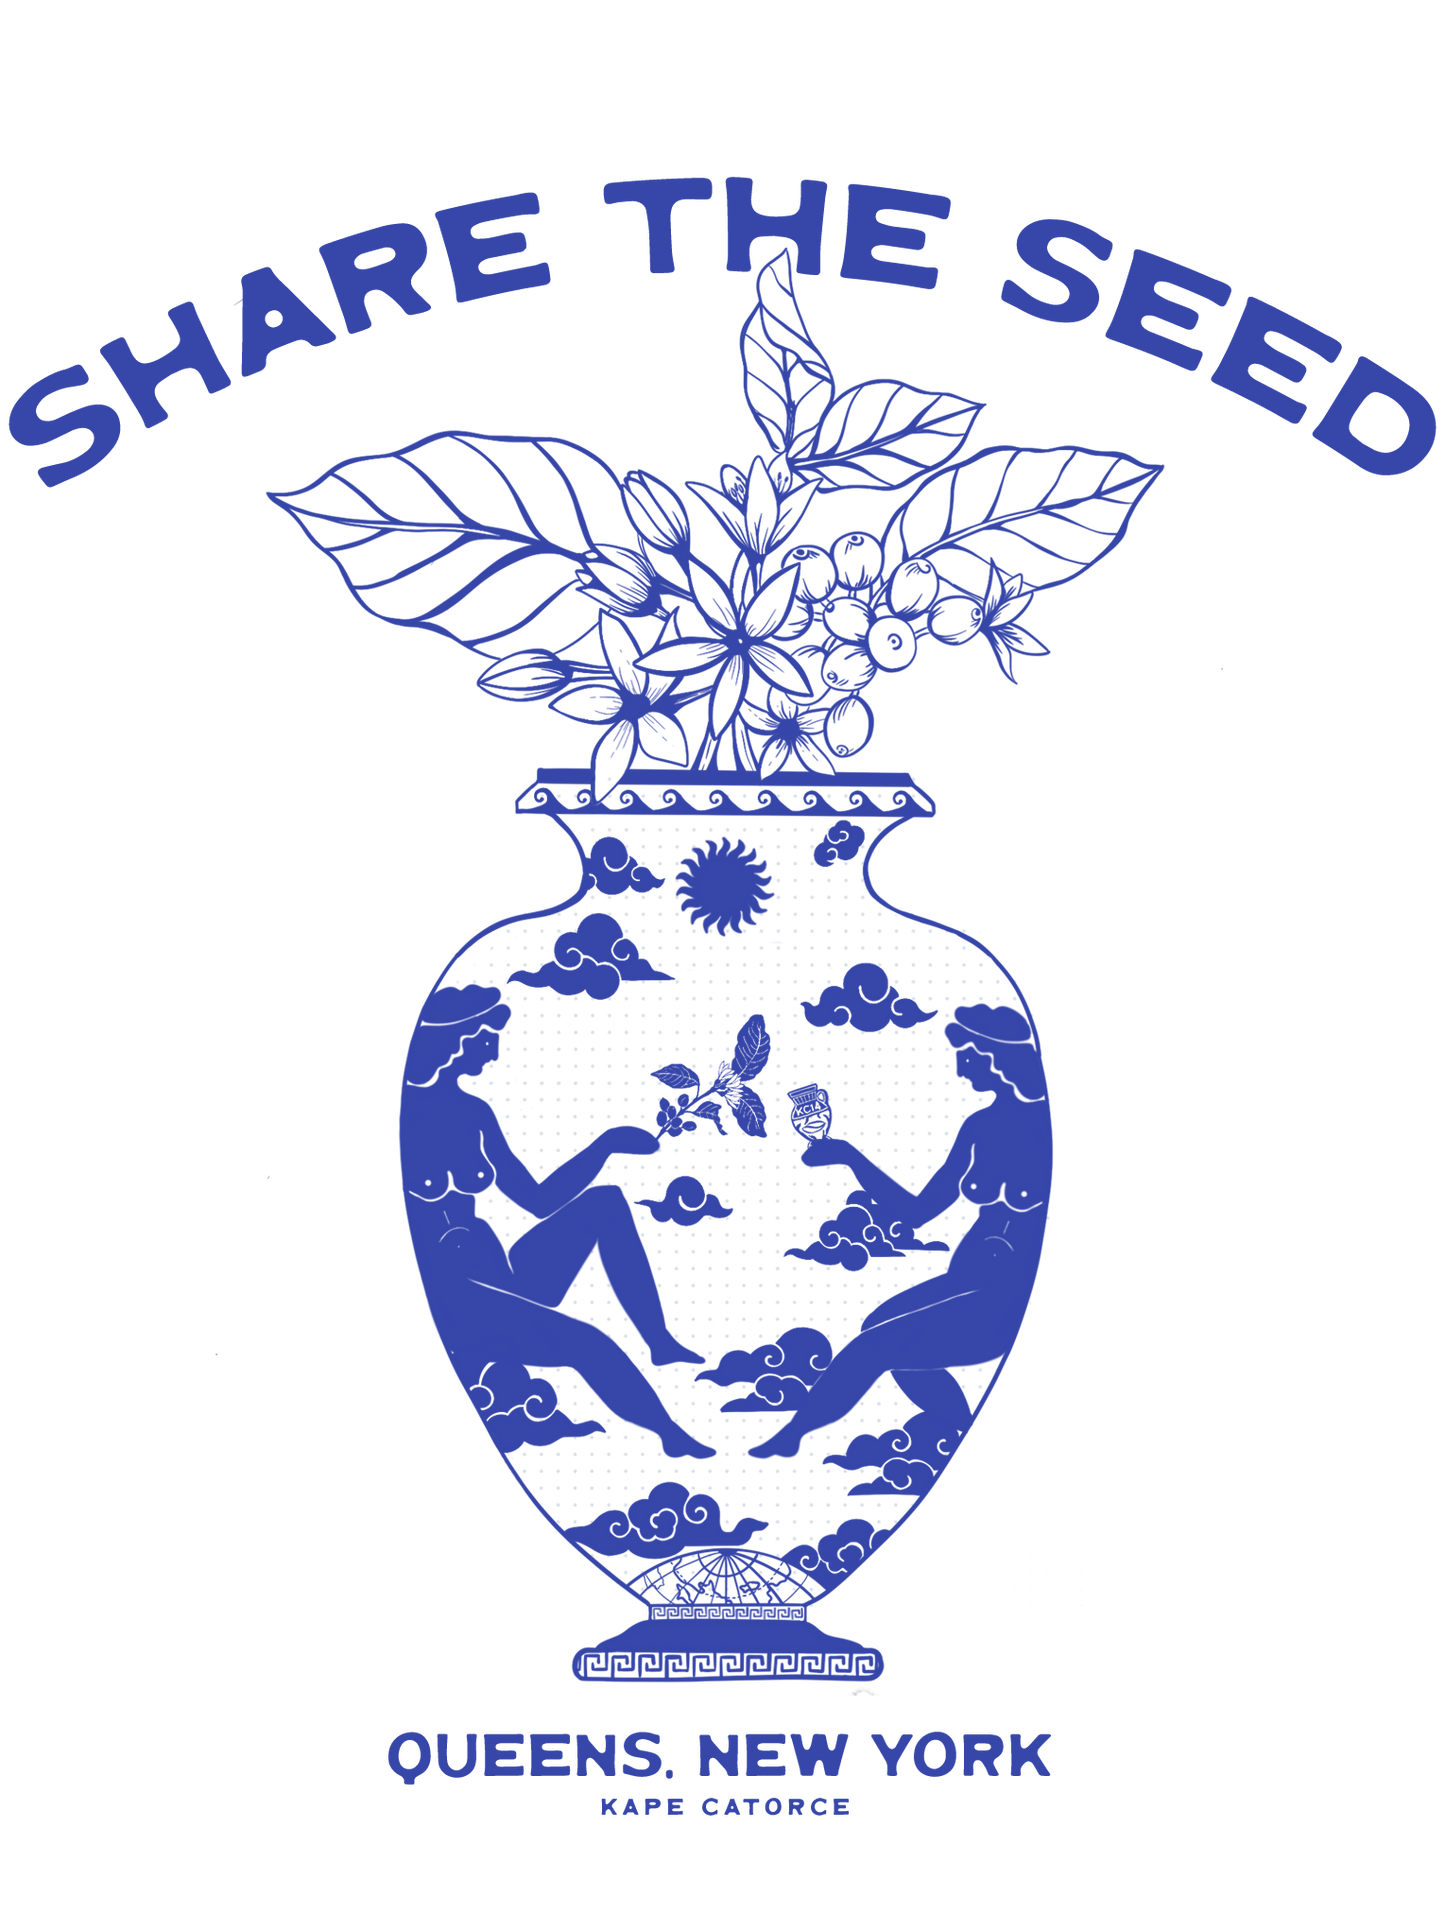 Share The Seed Tee